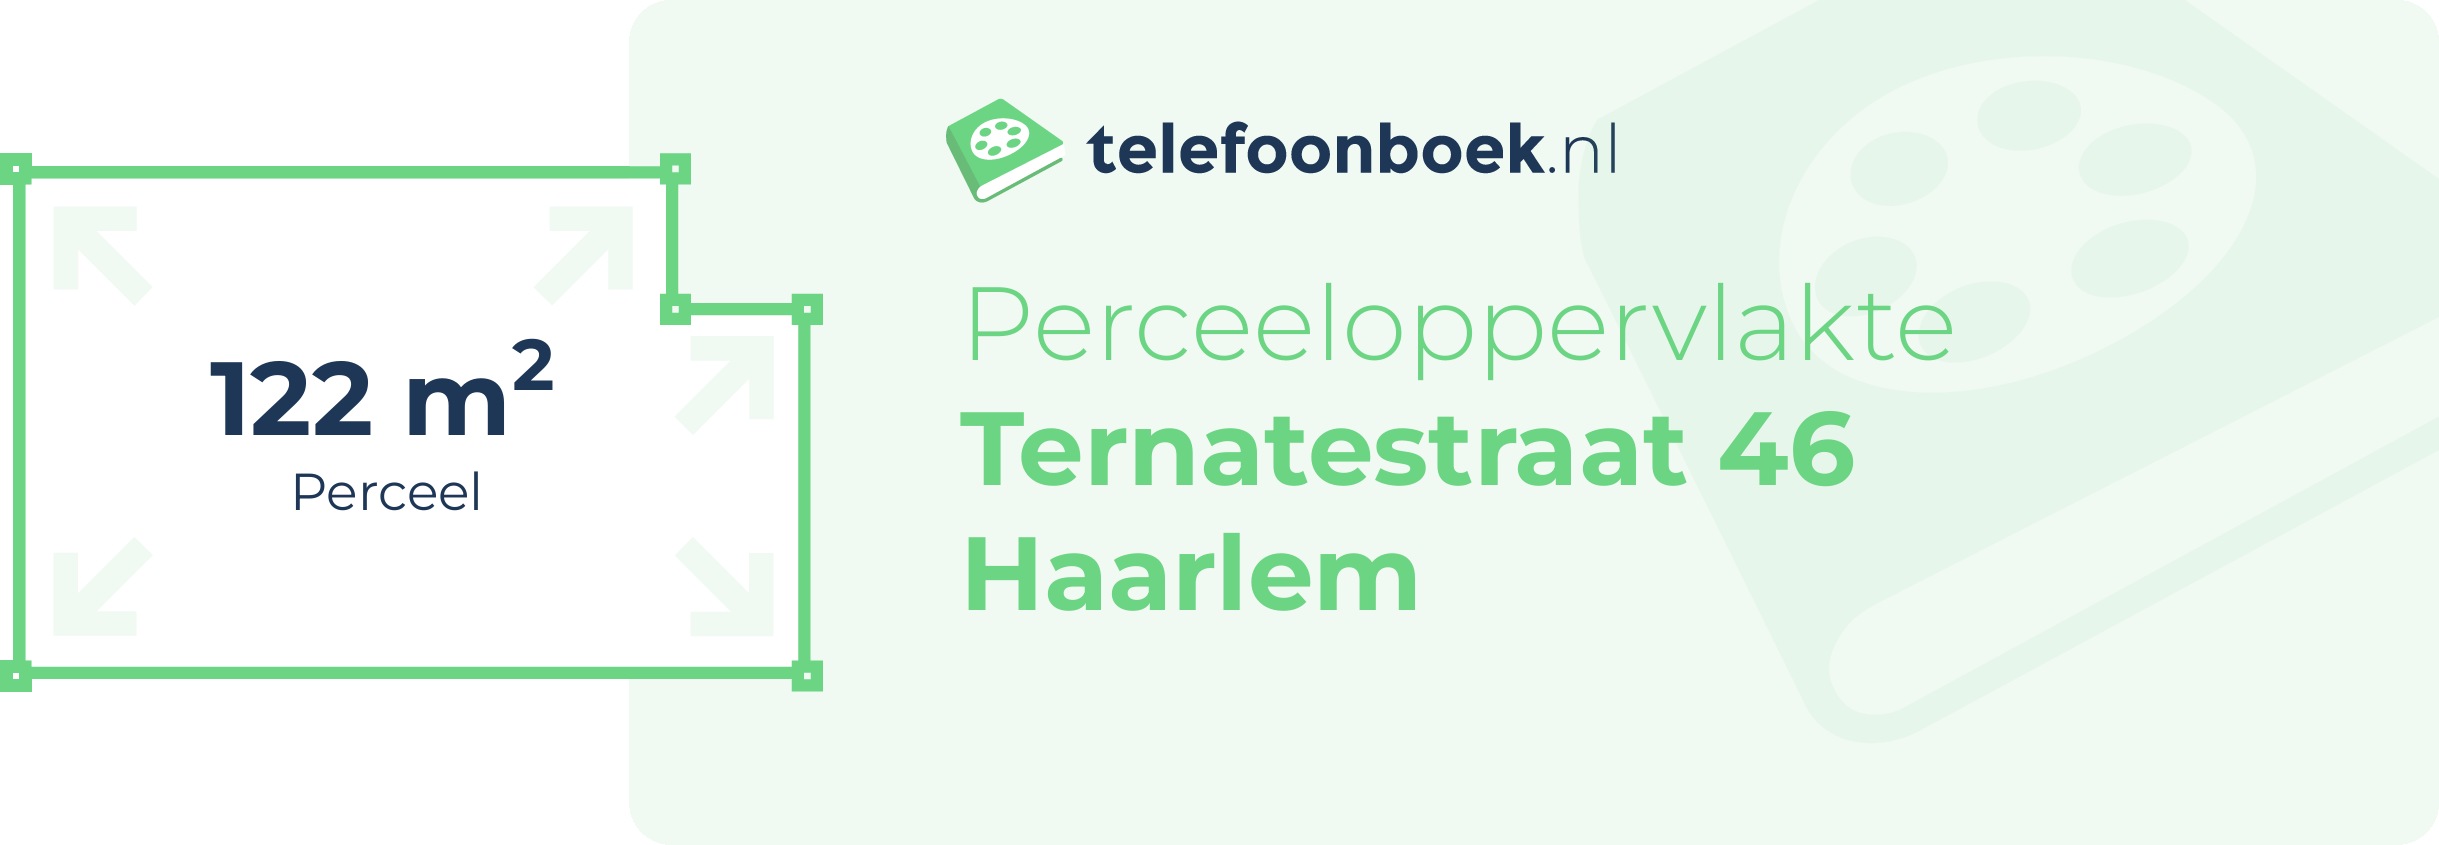 Perceeloppervlakte Ternatestraat 46 Haarlem